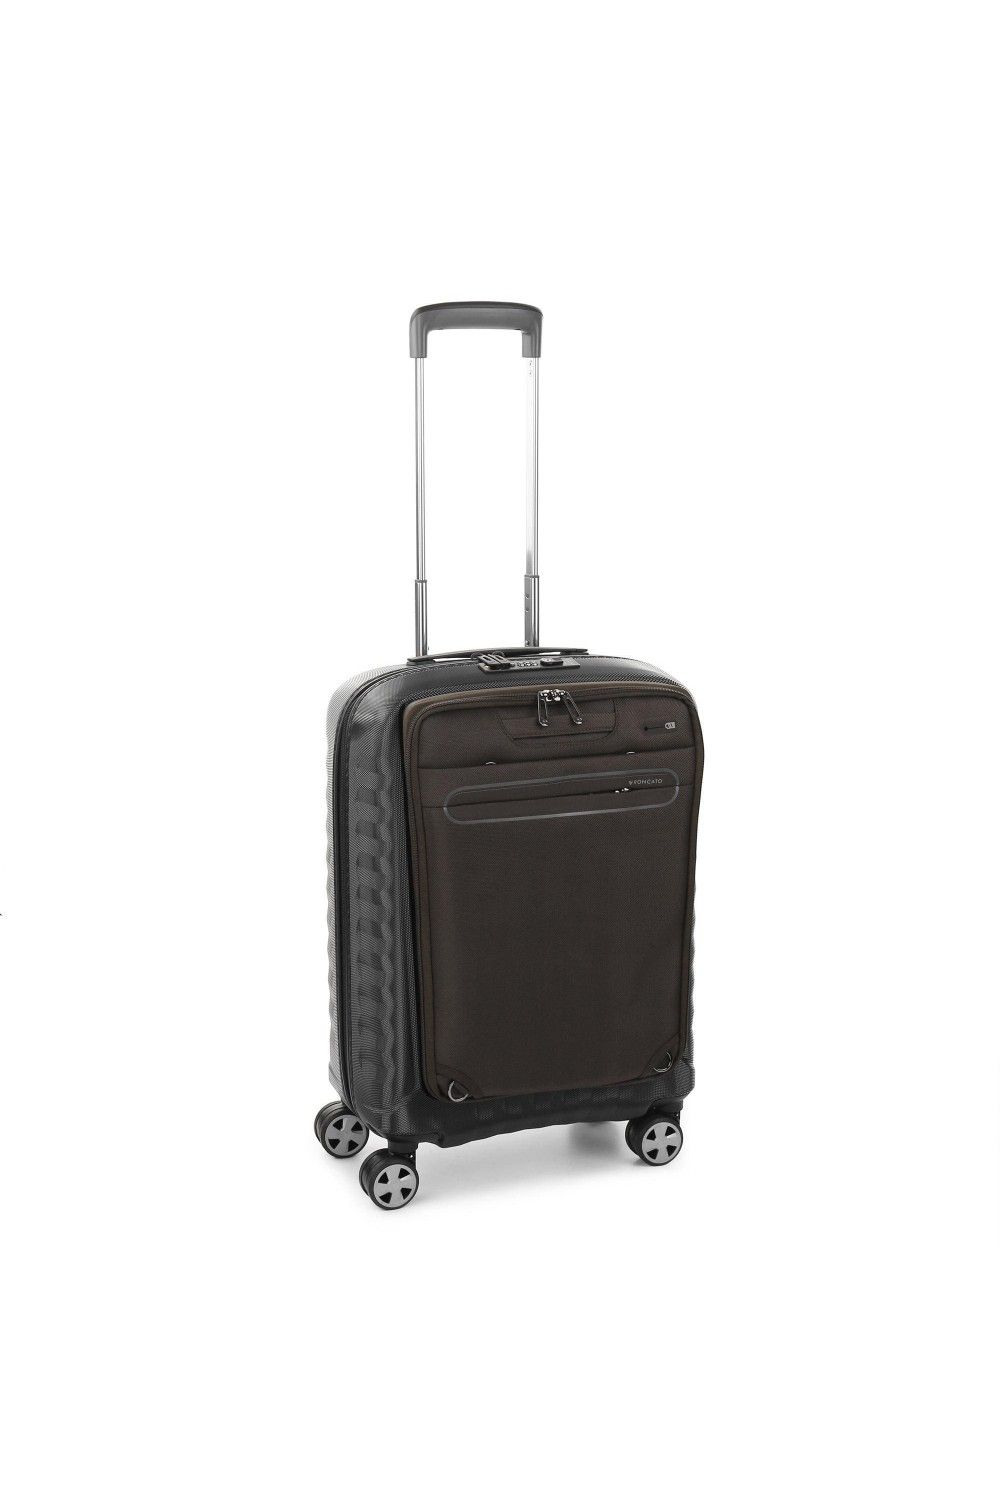 Roncato hand luggage D-Premium 55x40x20/23 expandable brown